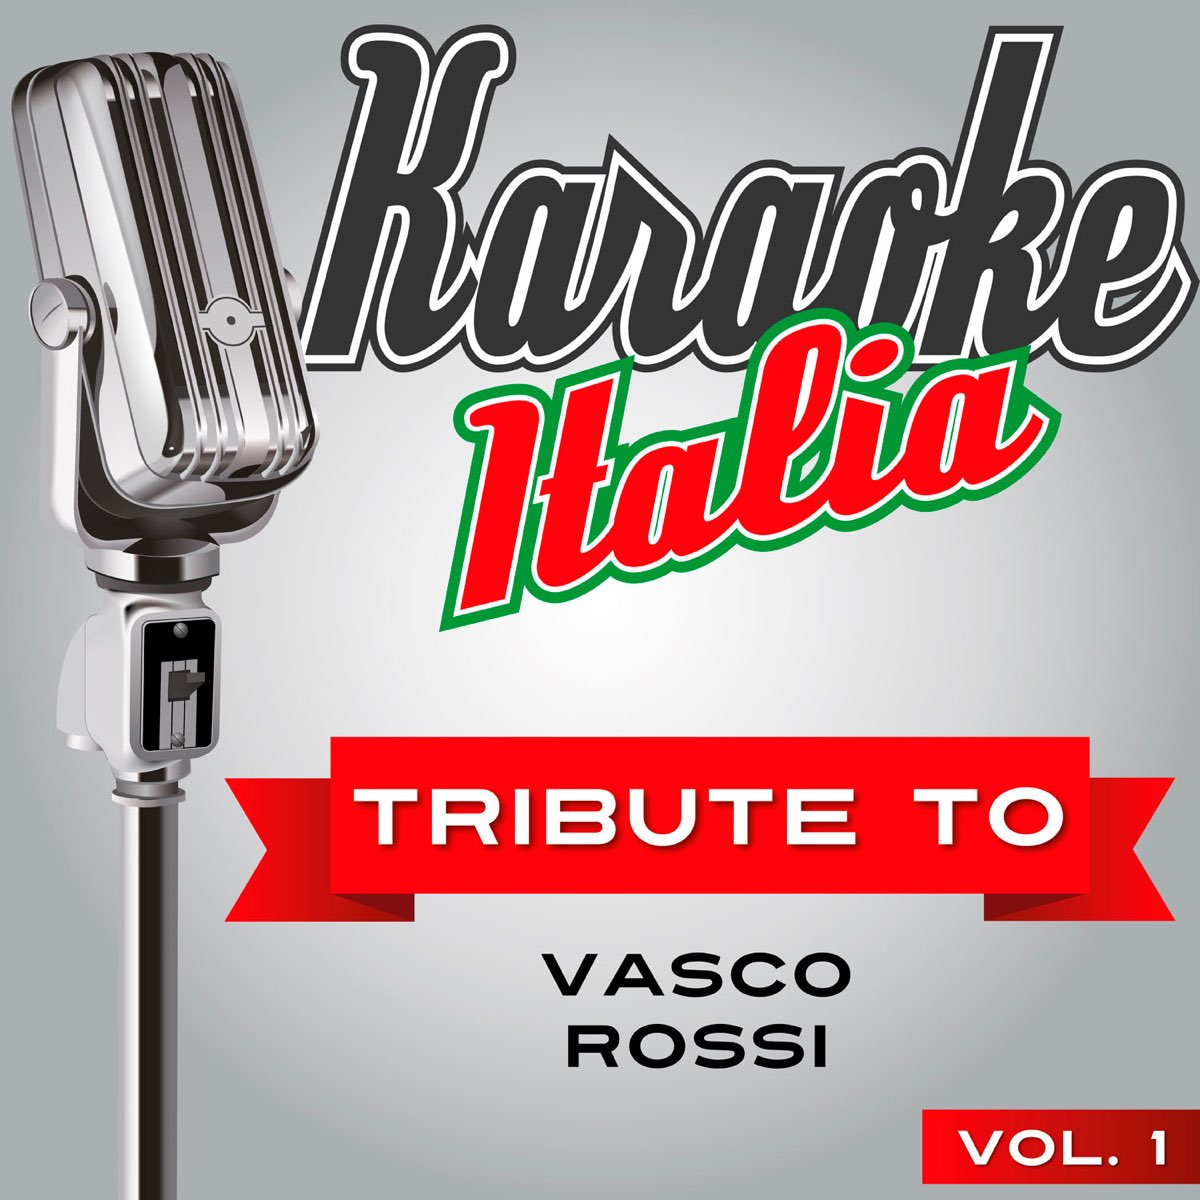 Karaoke Italia Tribute to Vasco Rossi, Vol. 1 - Album by Doc Maf Ensemble -  Apple Music